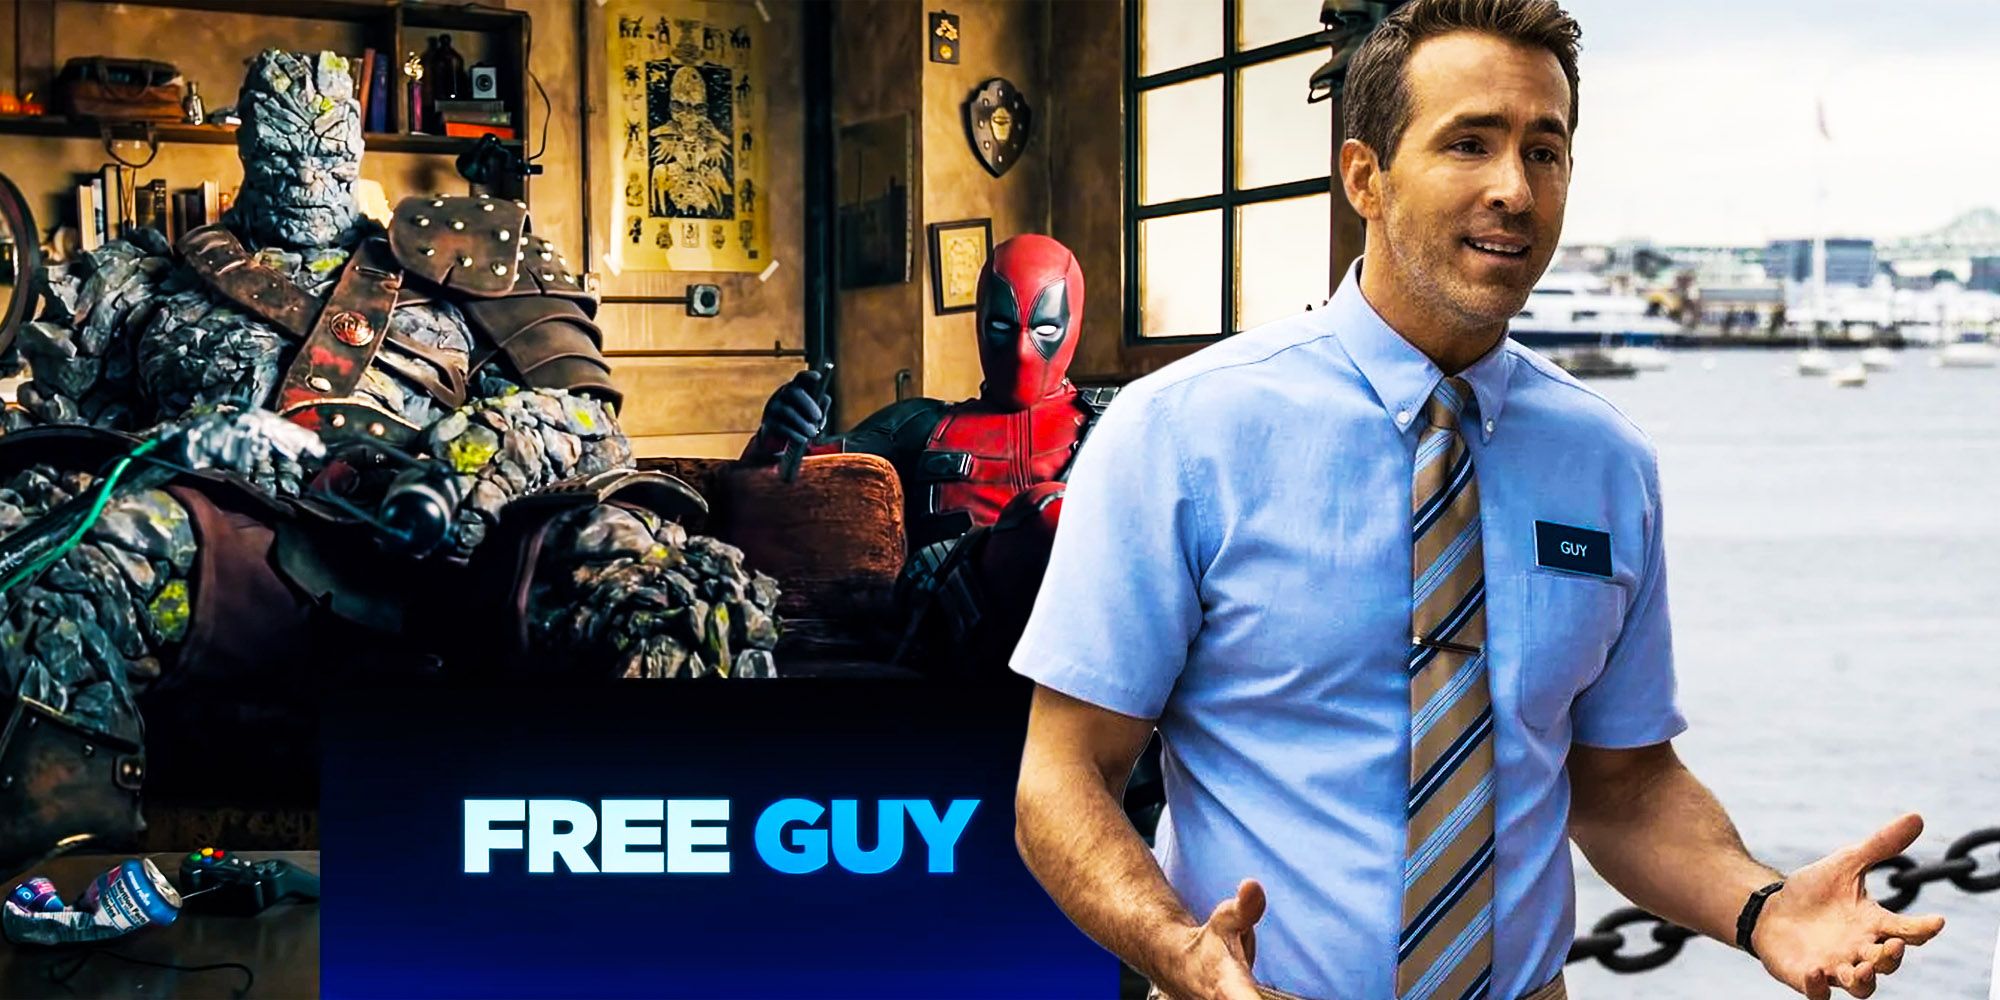 Free Guy trailer sets Ryan Reynolds, Jodie Comer in videogame world